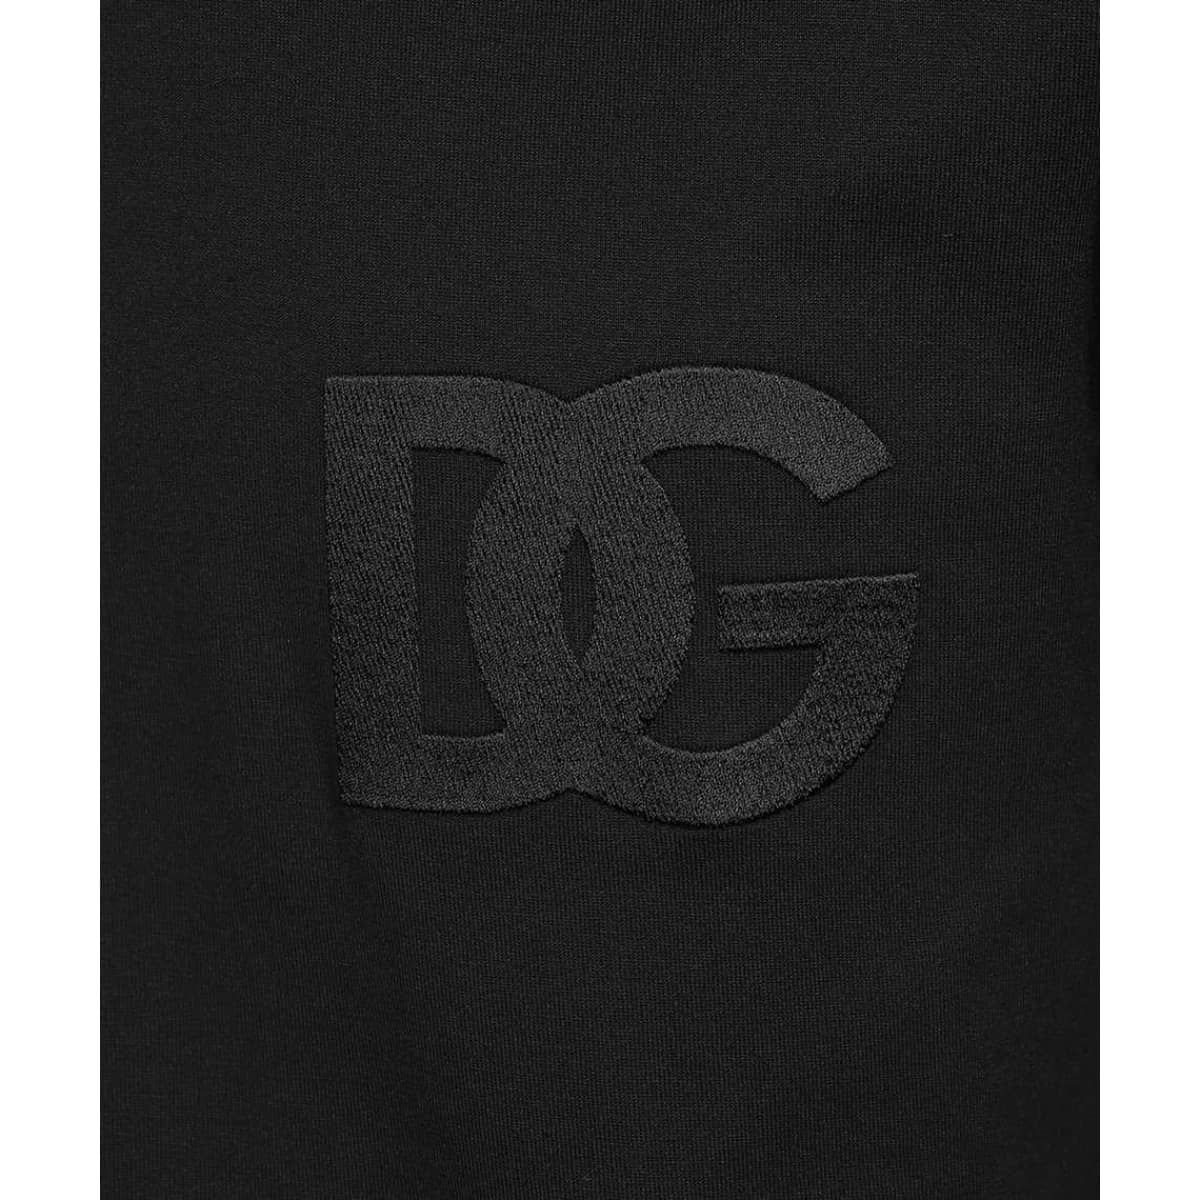 D&G T-shirt Nero / Black